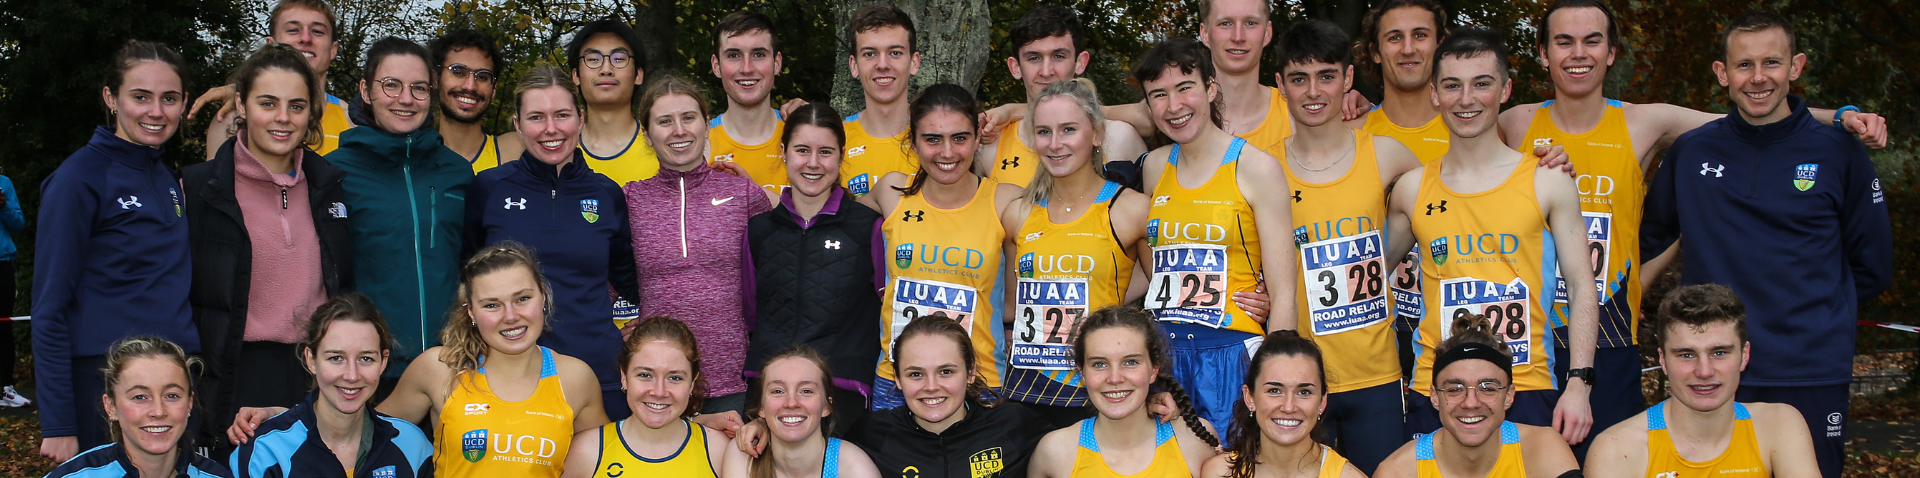 UCD Athletics Club members